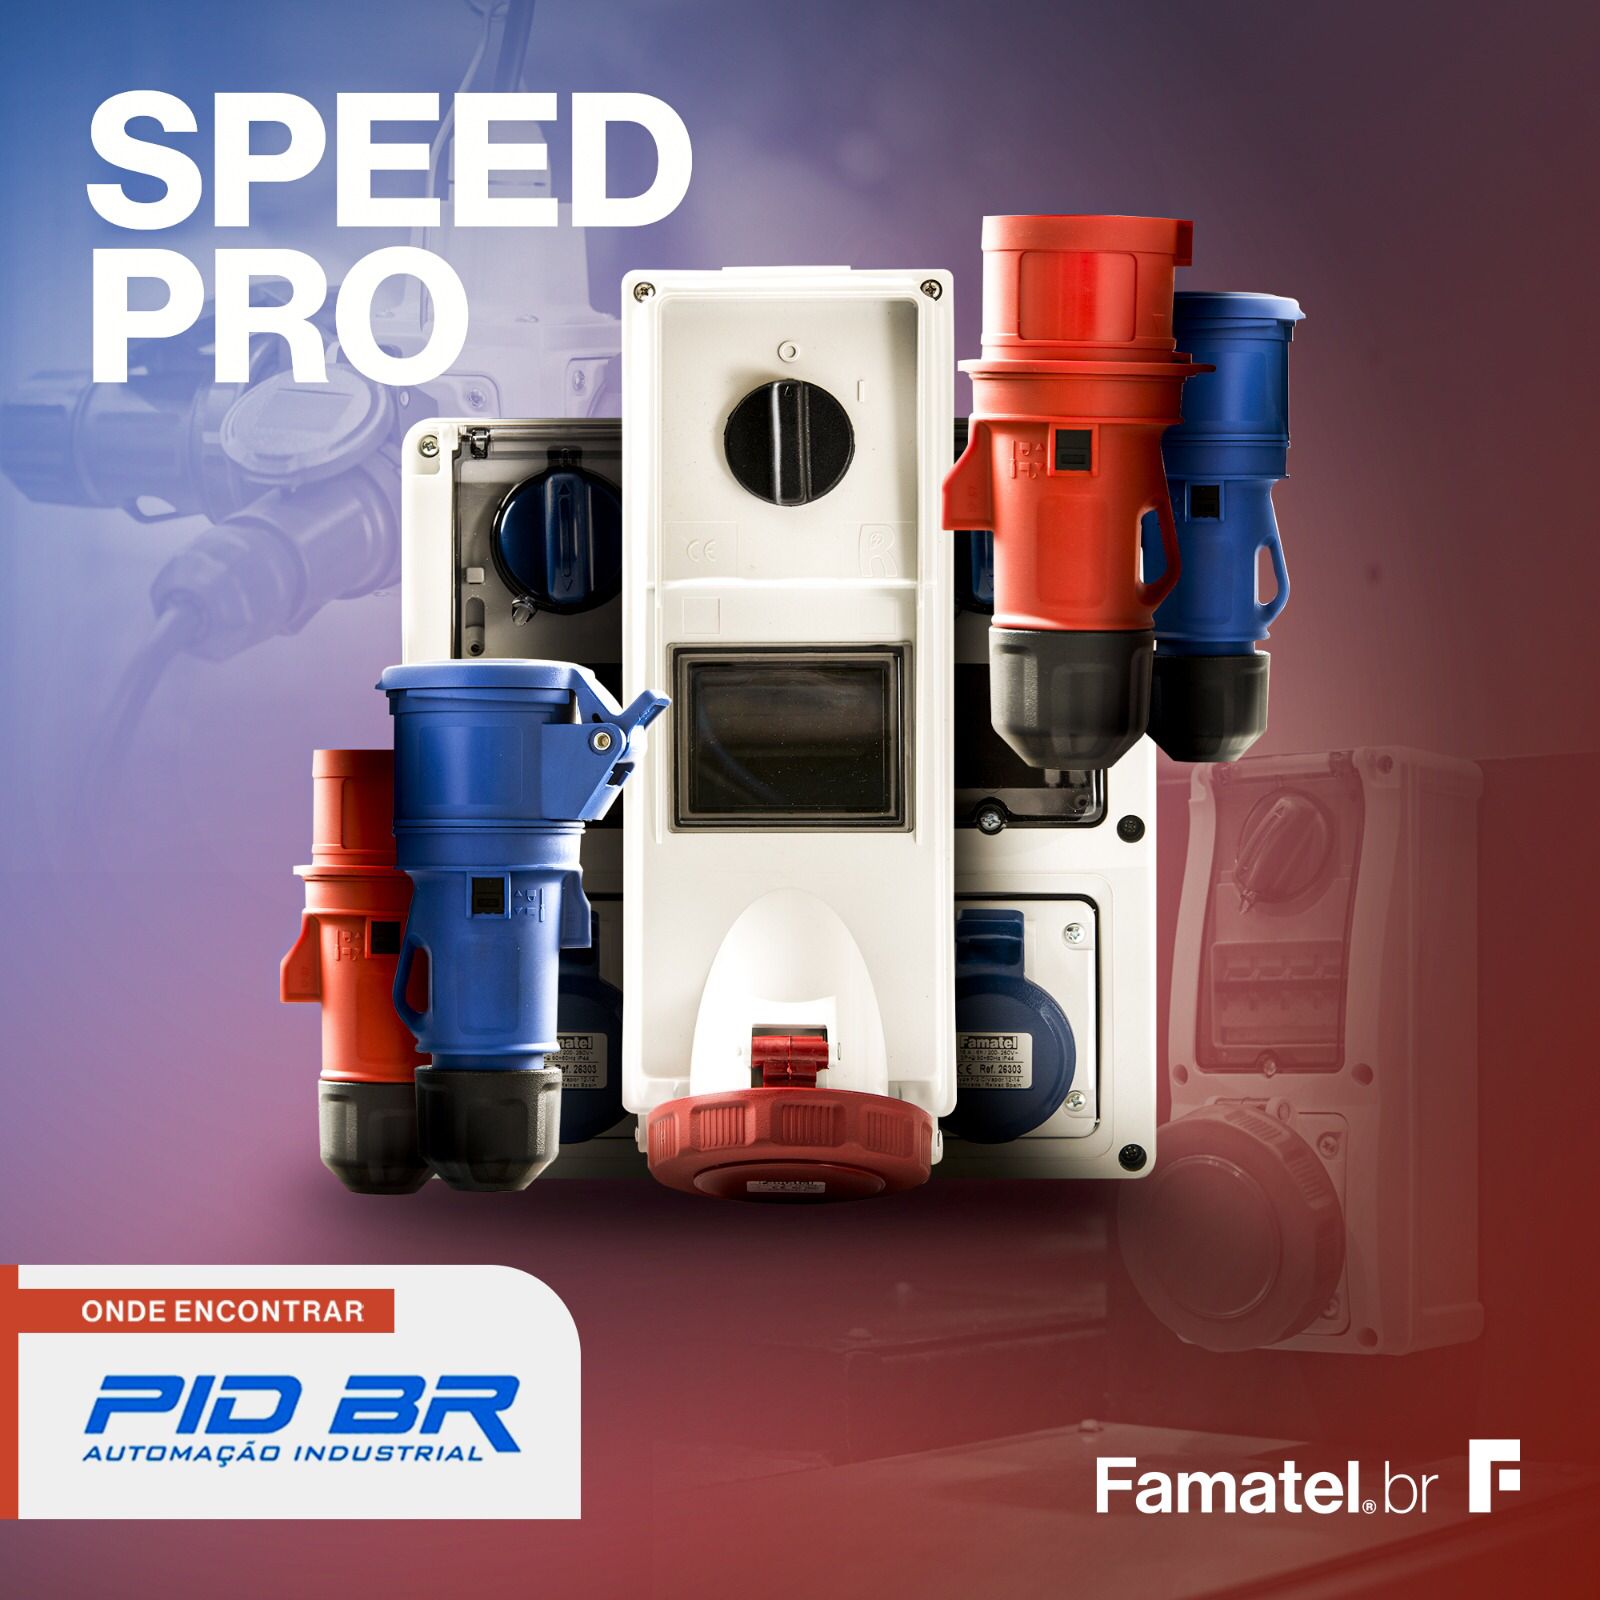 Speed Pro Famatel